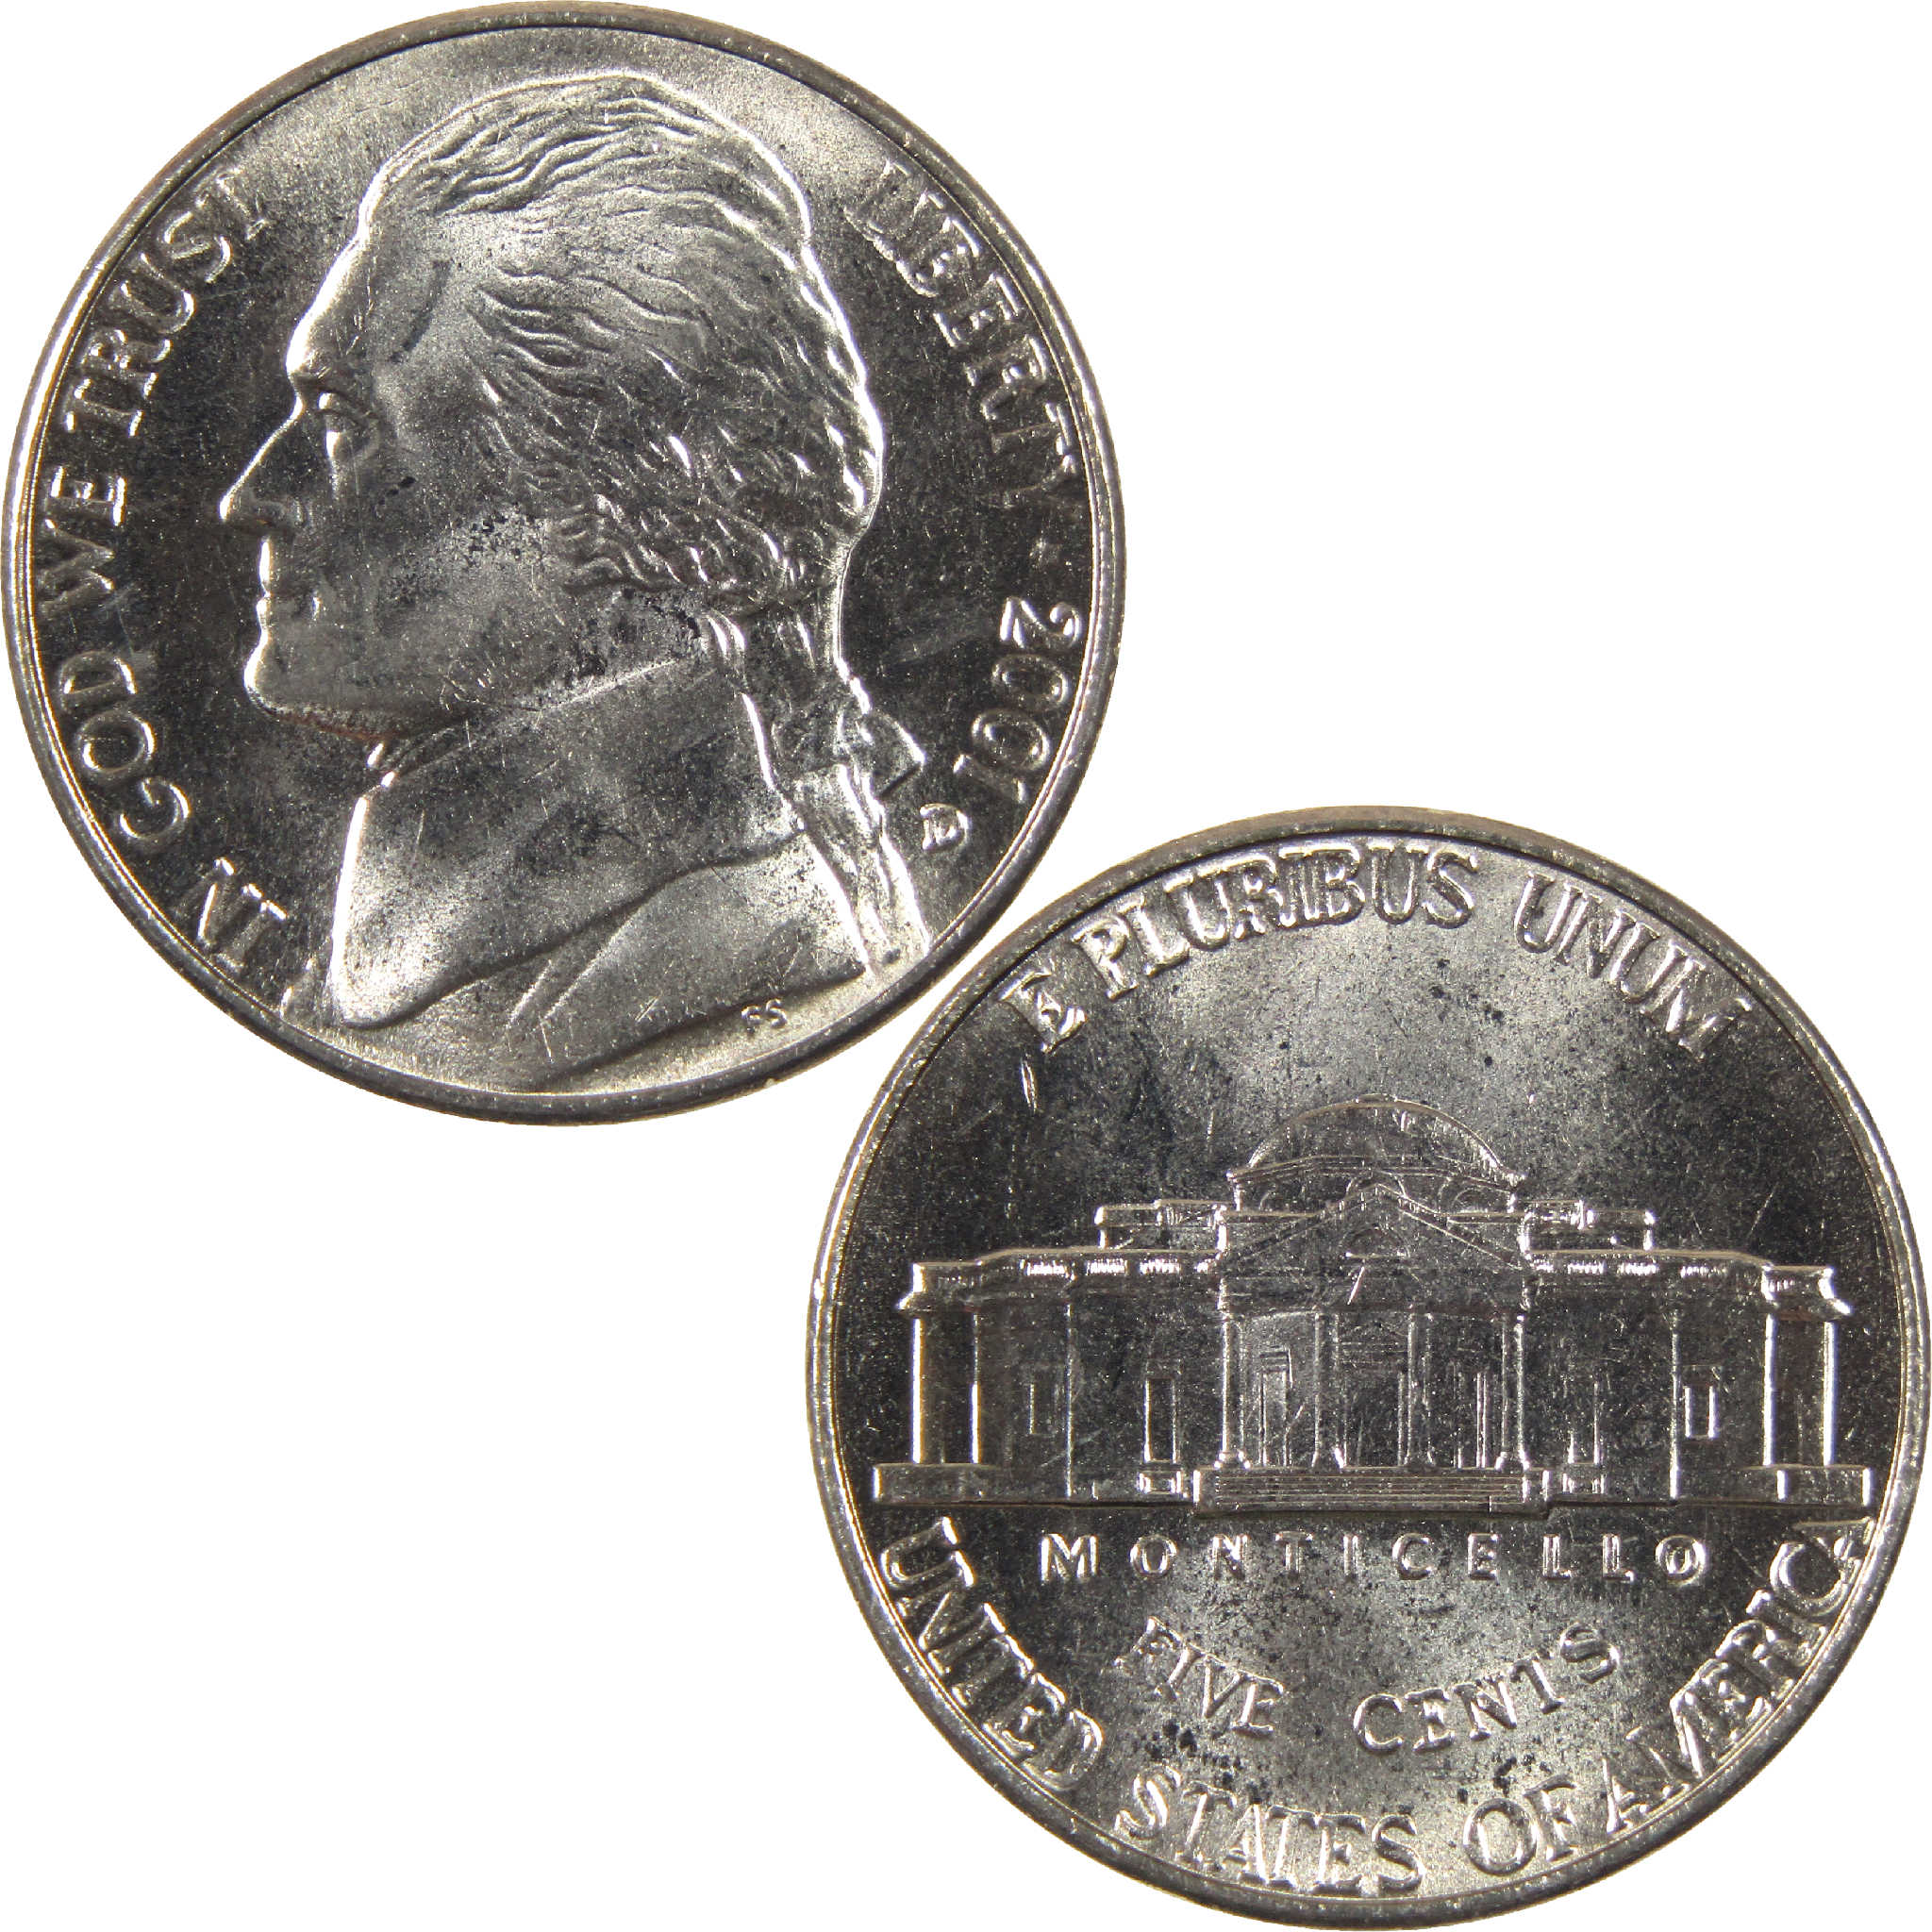 2001 D Jefferson Nickel BU Uncirculated 5c Coin